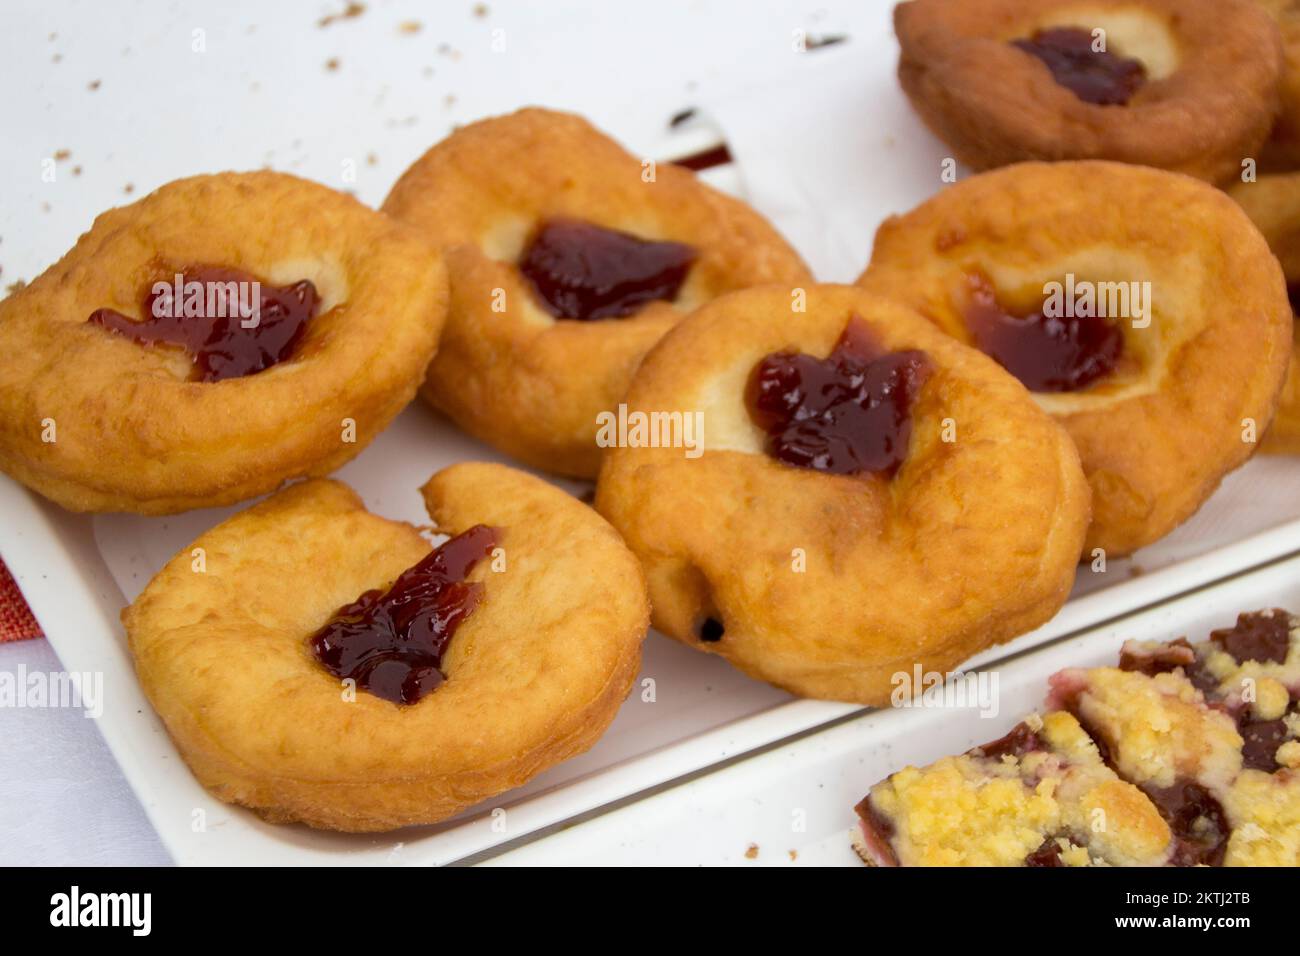 Deep-fried doughnut (paczki or sisky) topped with jam Stock Photo